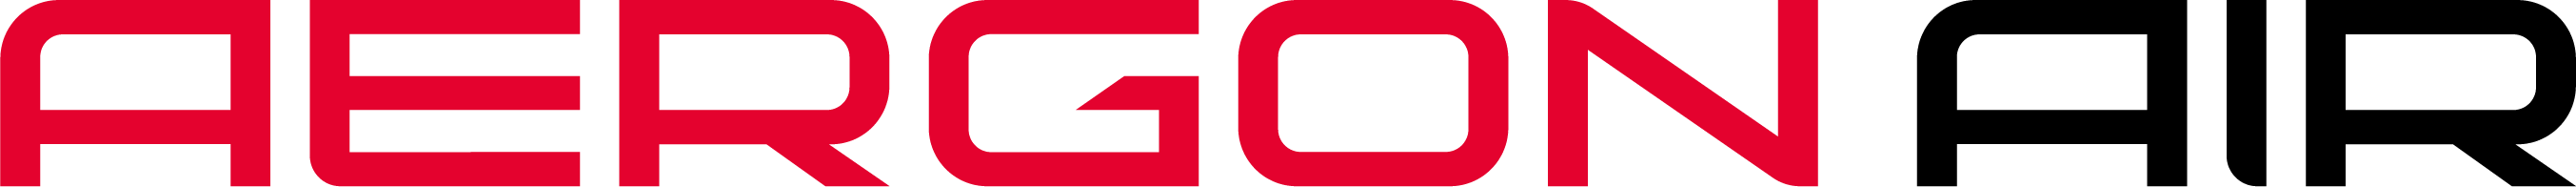 Leki Aergon logo